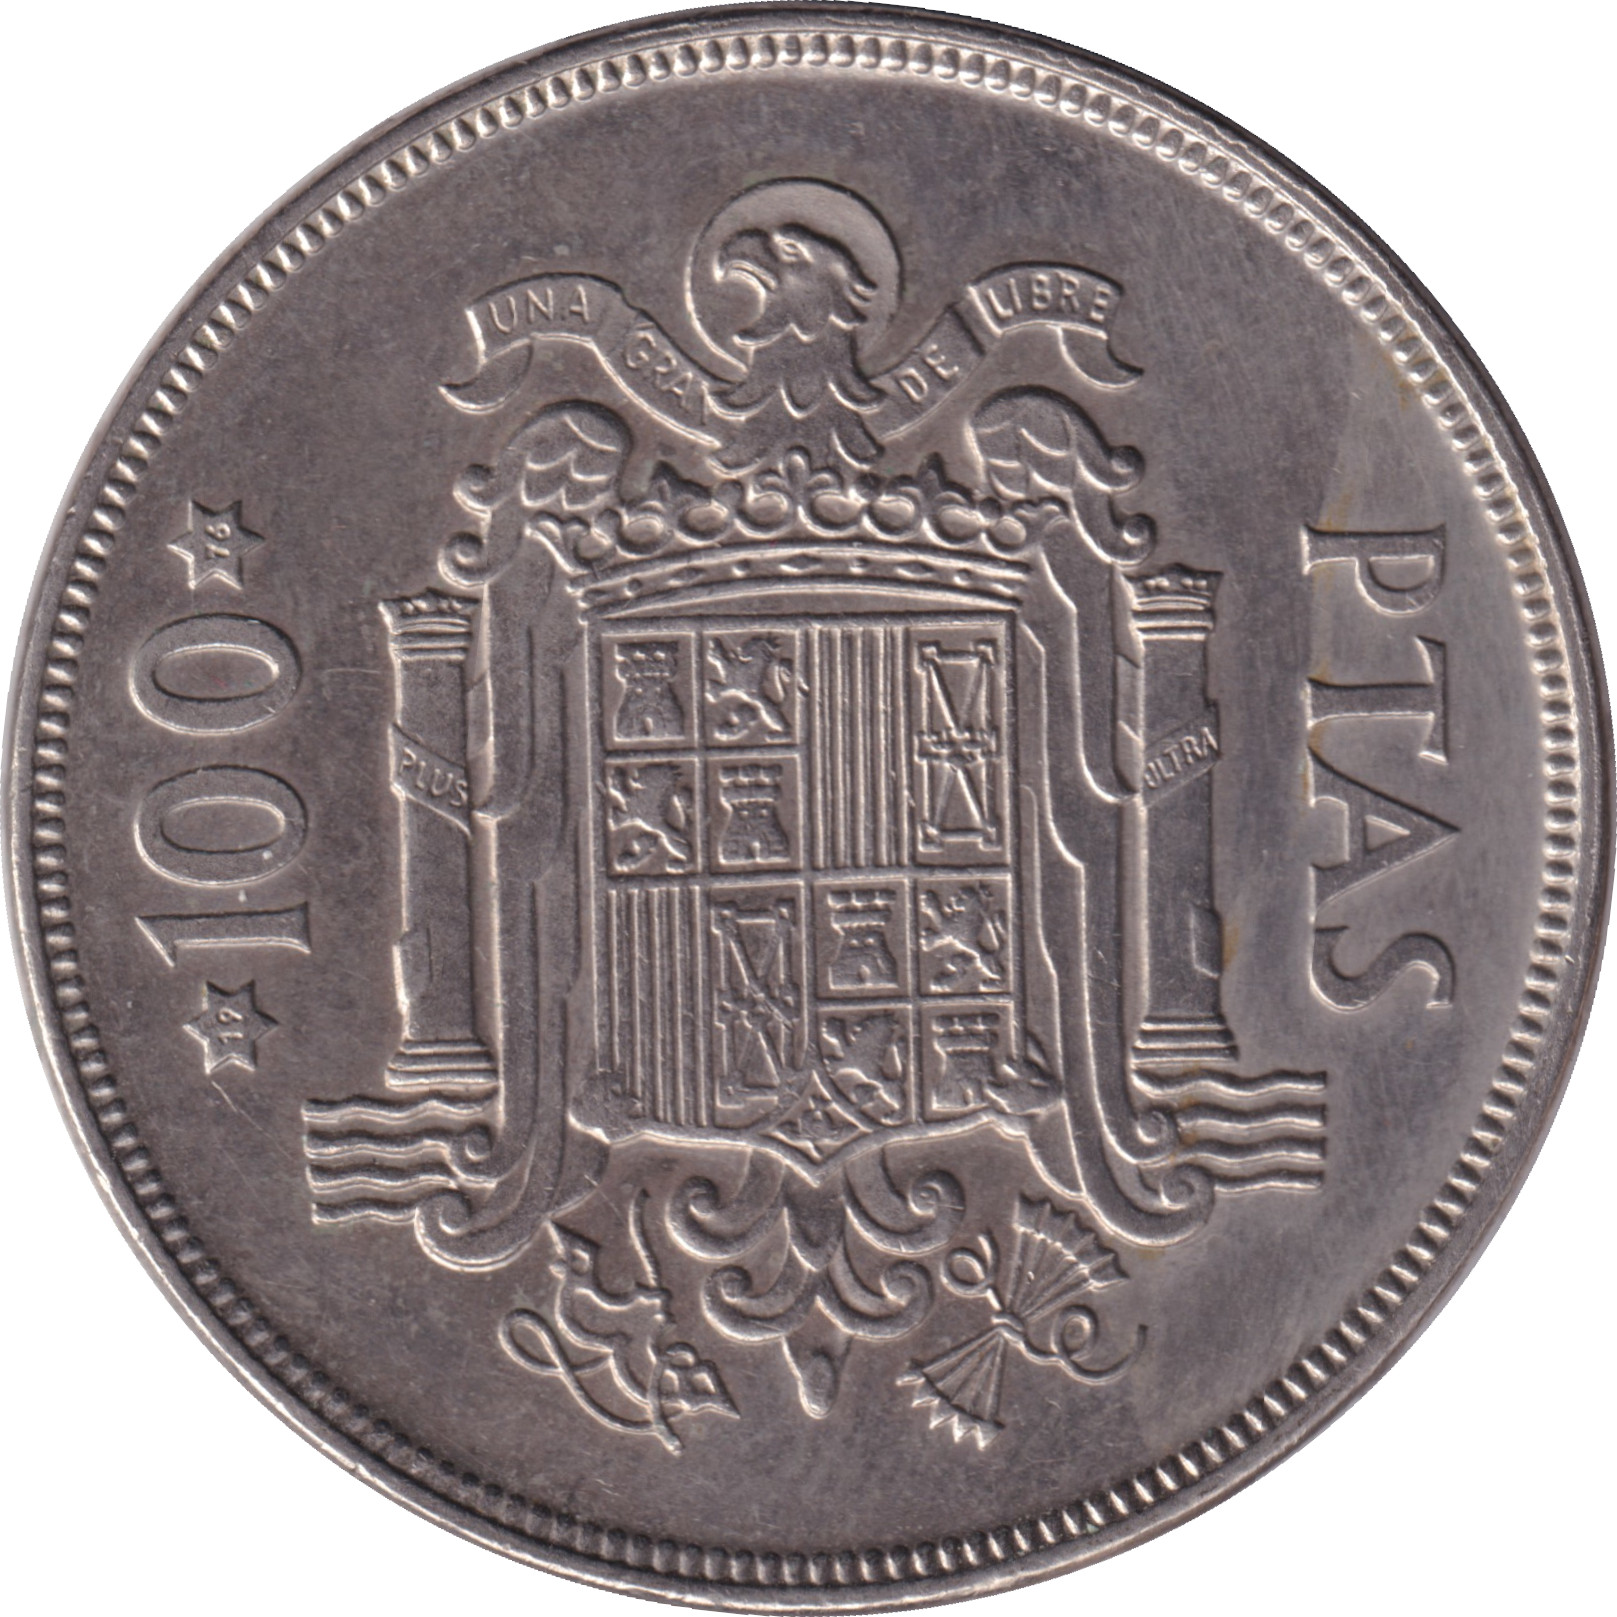 100 pesetas - Juan Carlos I - Armoiries